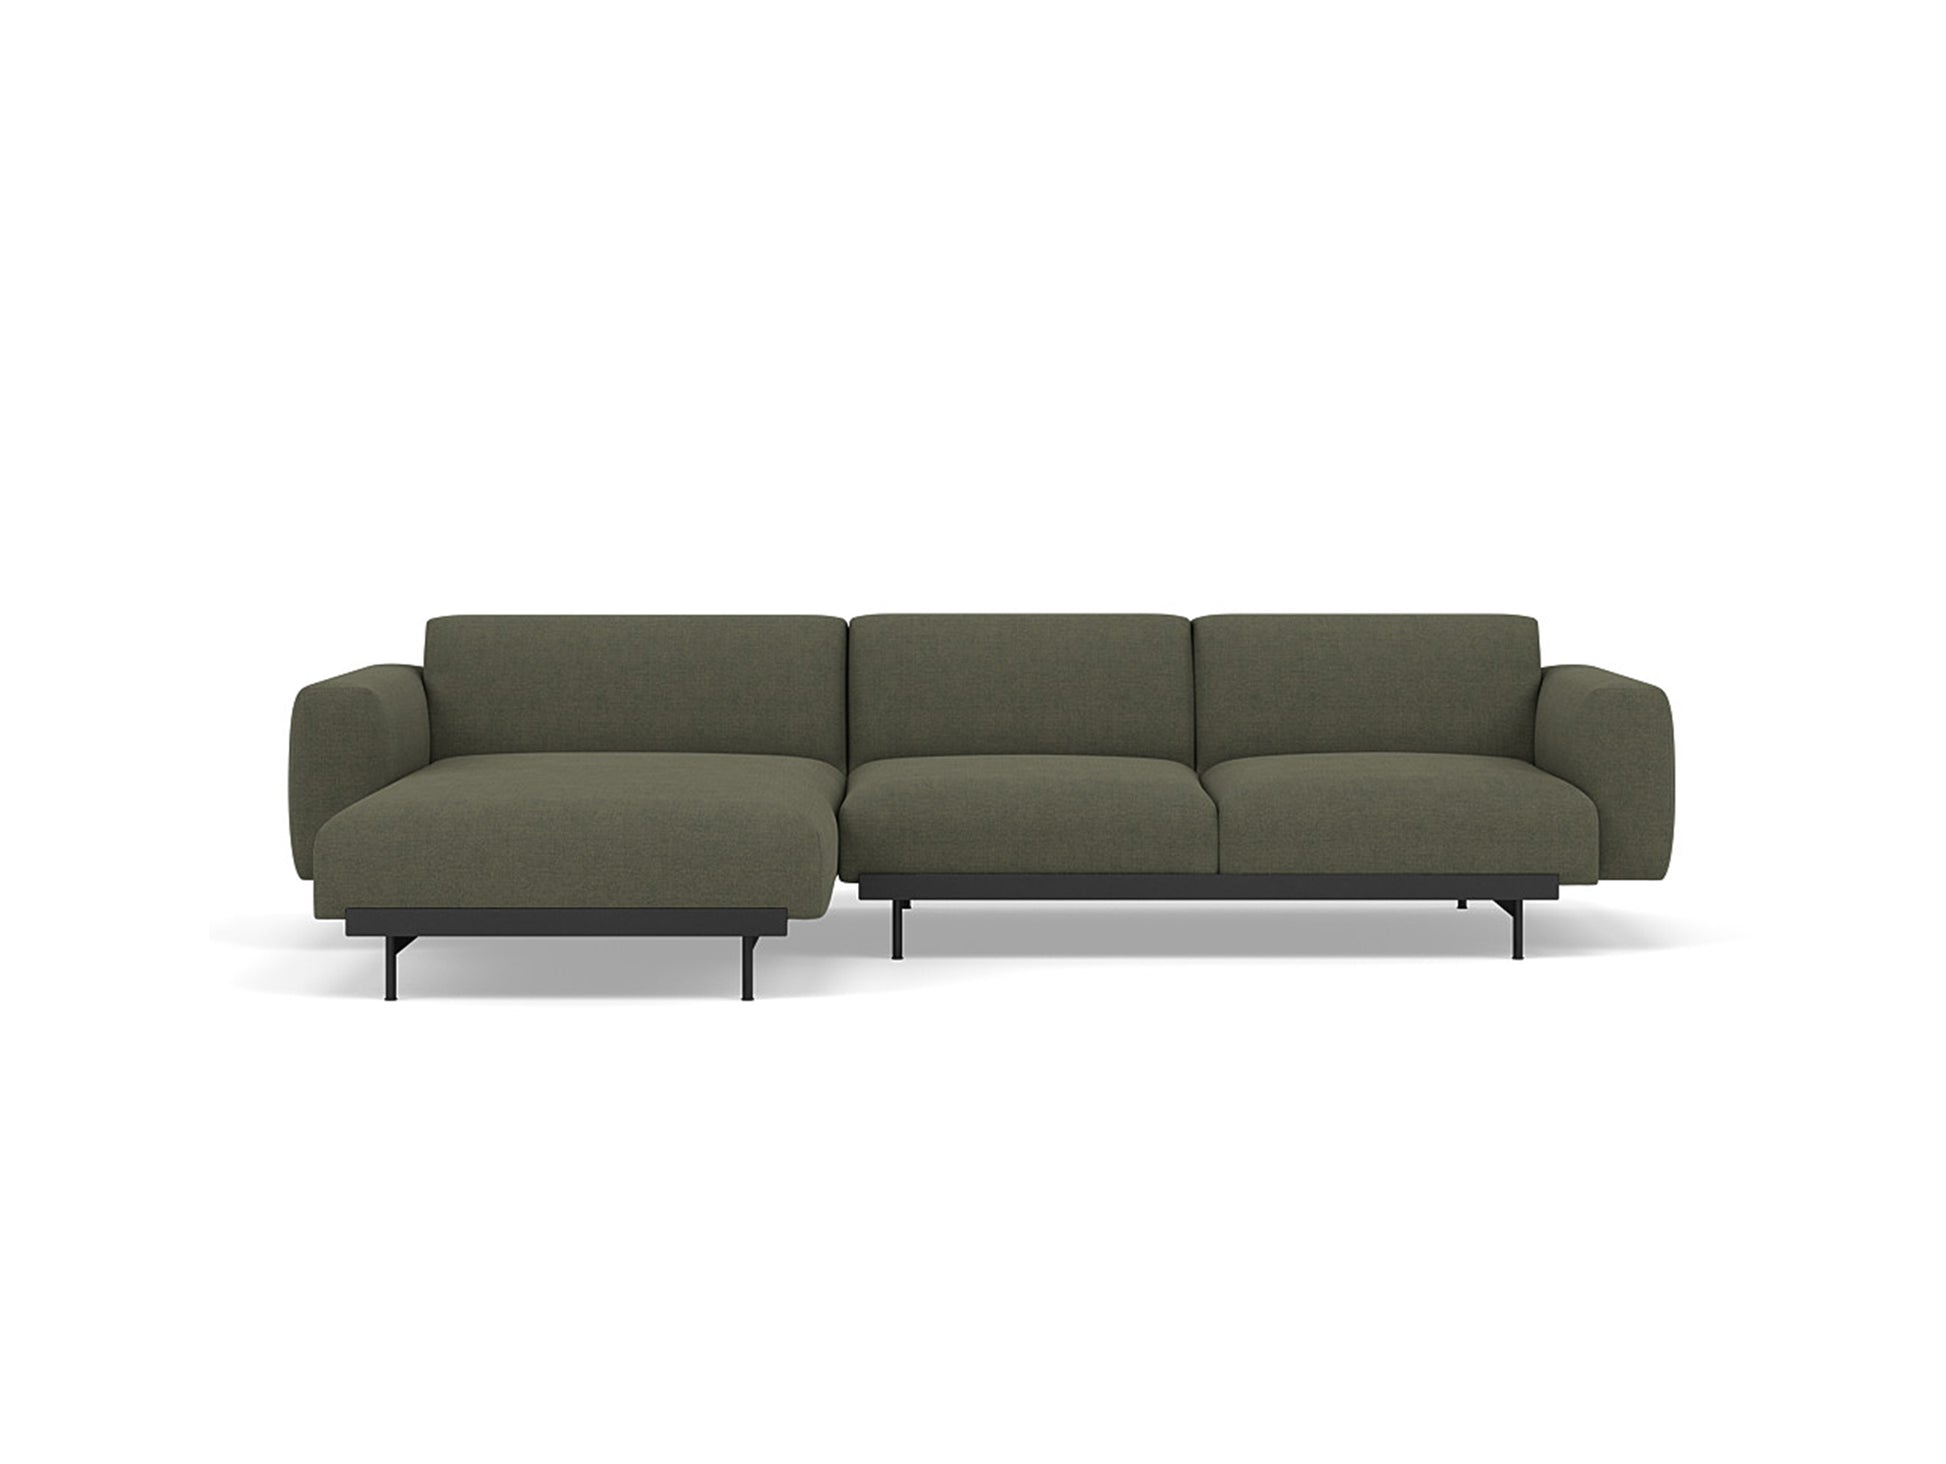 In Situ 3-Seater Modular Sofa by Muuto - Configuration 7 / Fiord  961